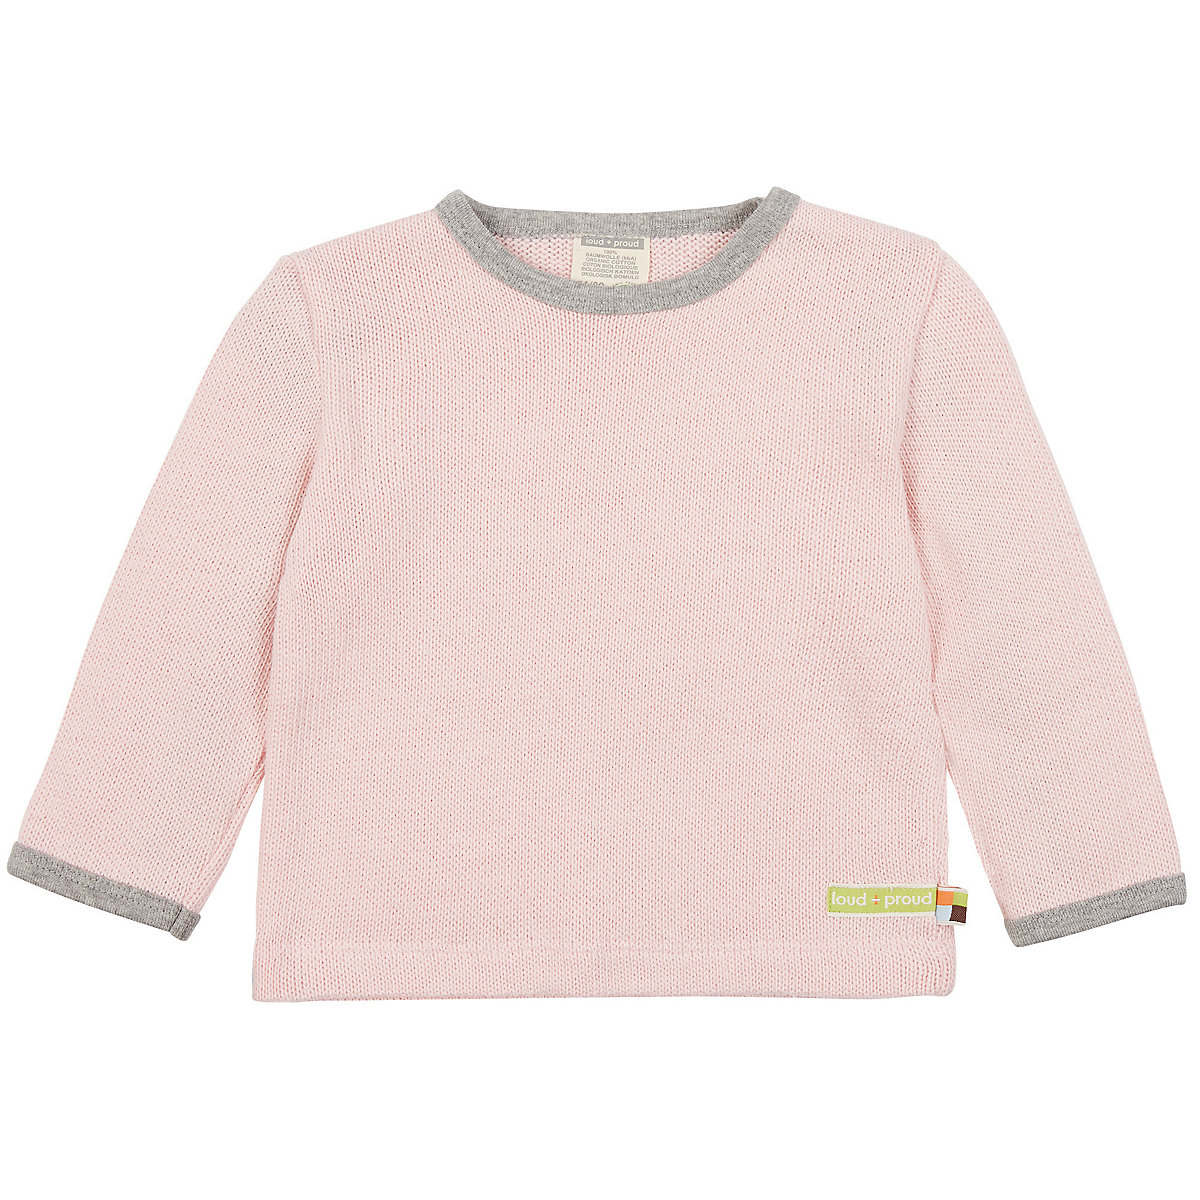 loud + proud Shirt Strick Langarmshirts für Mädchen rosa